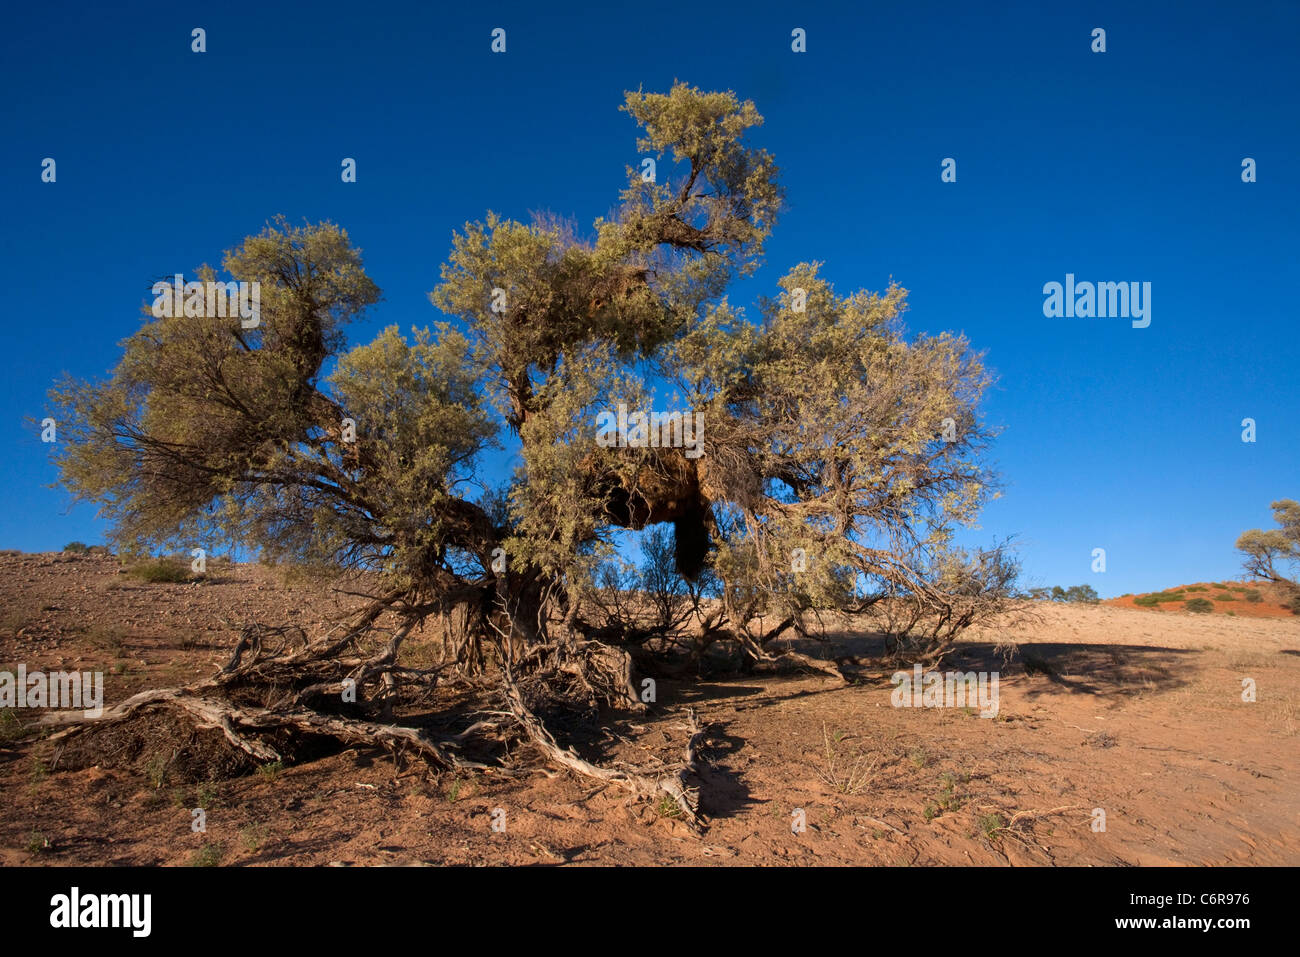 Kalahari landscape with an old false camelthorn tree (Acacia haematoxylon) Stock Photo